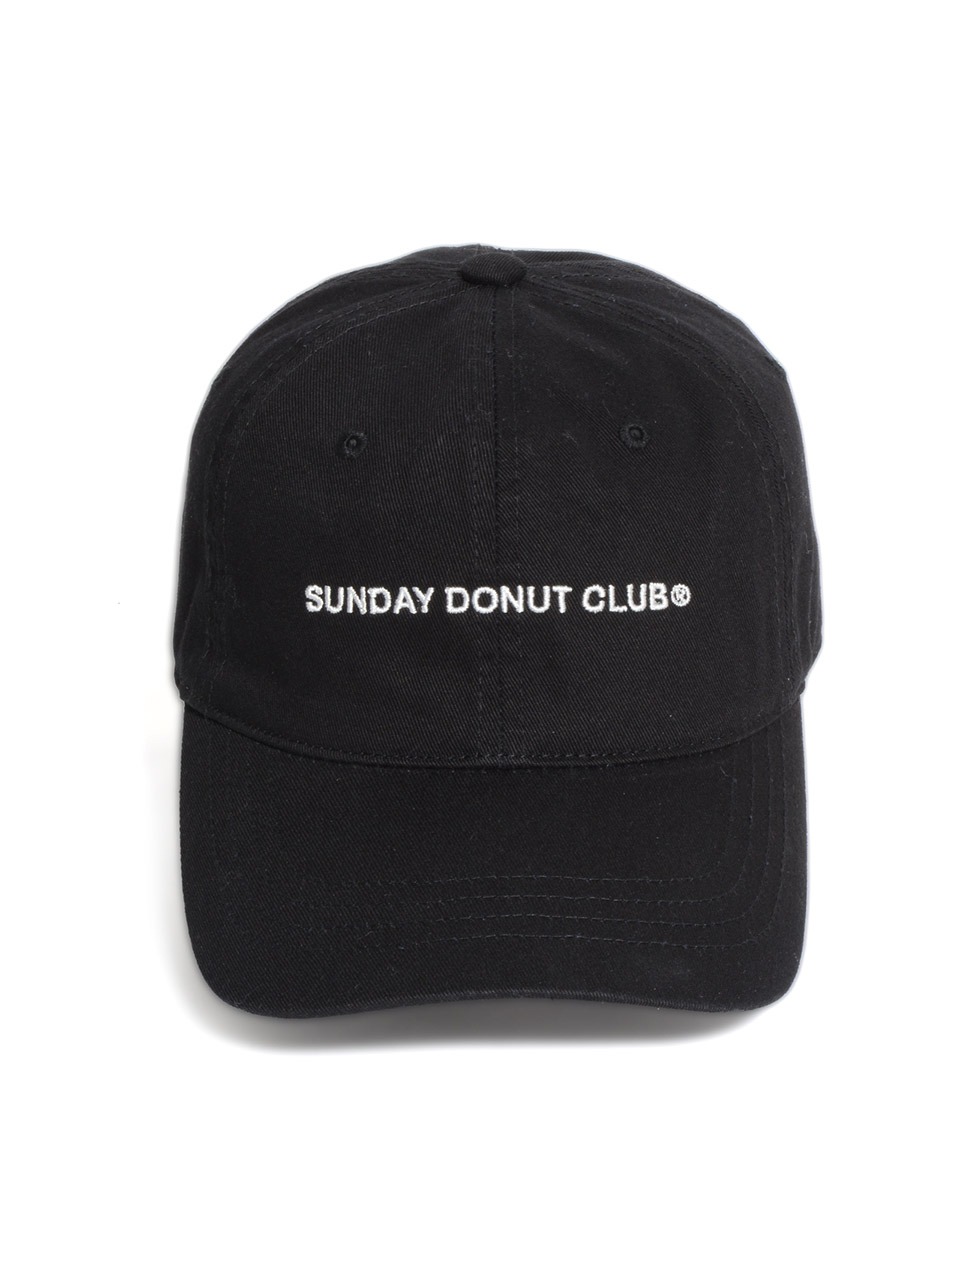 SUNDAY DONUT CLUB [Black]